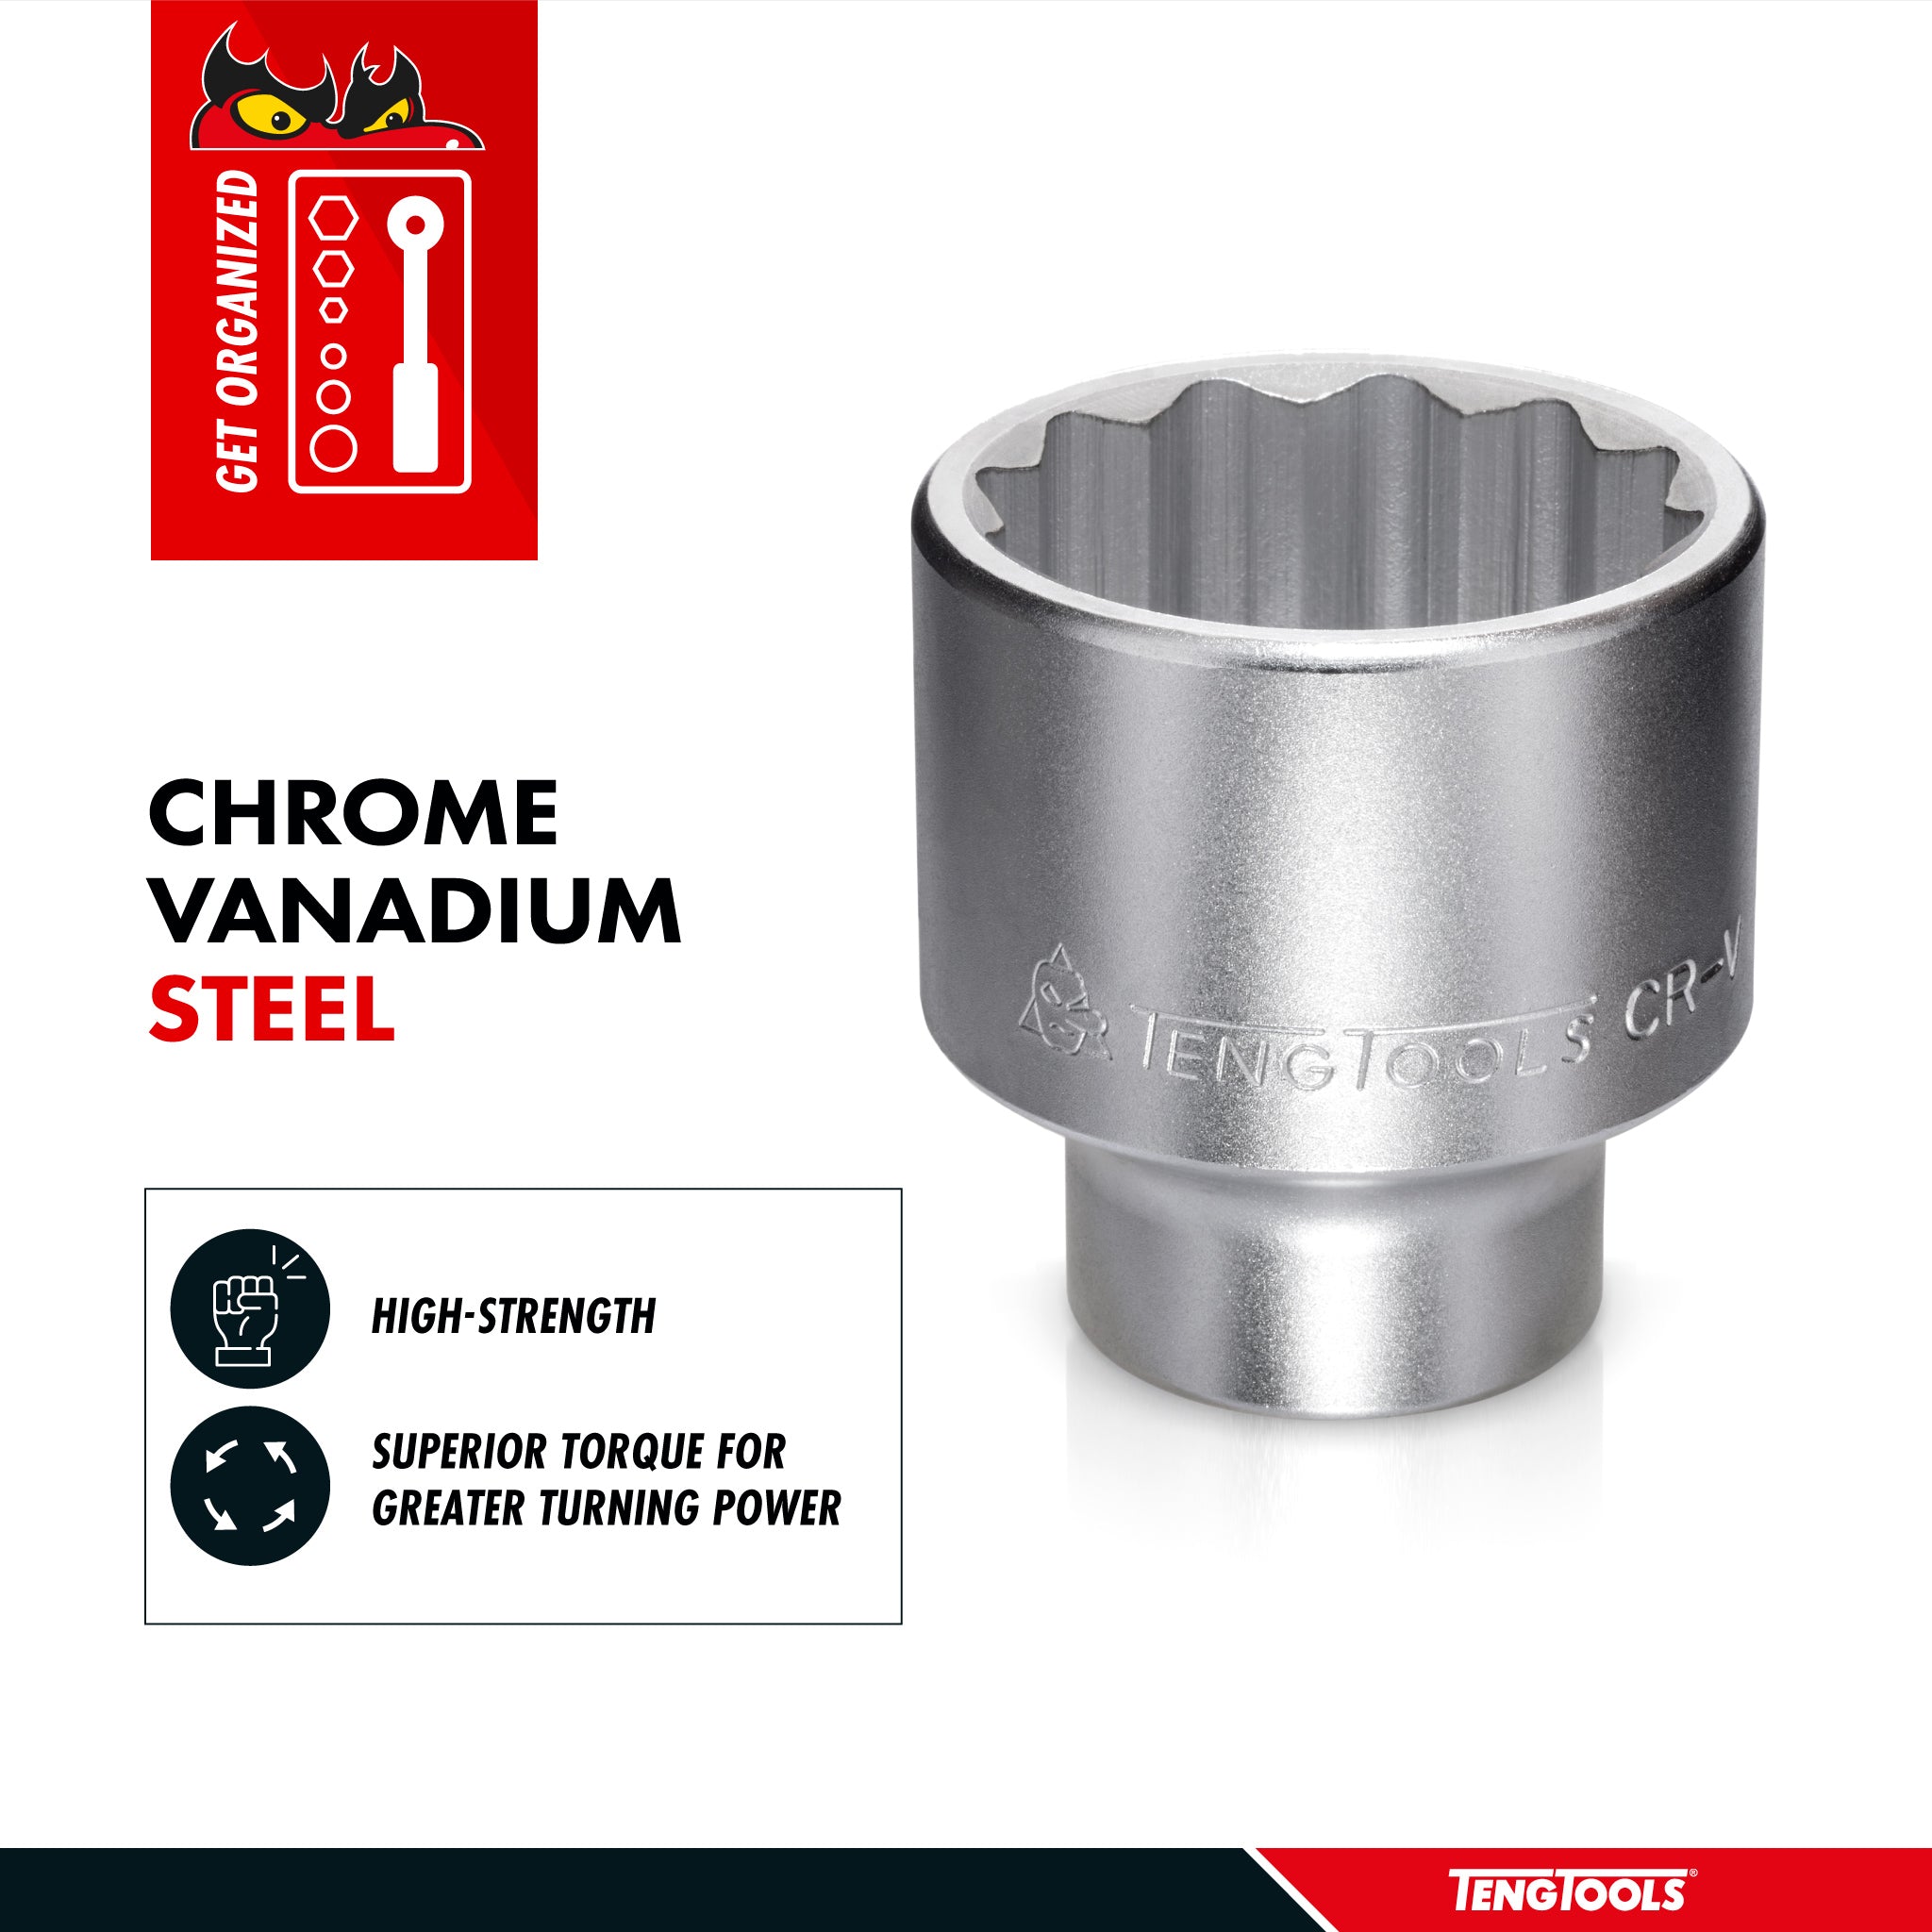 Teng Tools 1 Inch Drive 12 Point Metric Shallow Chrome Vanadium Sockets - 50mm